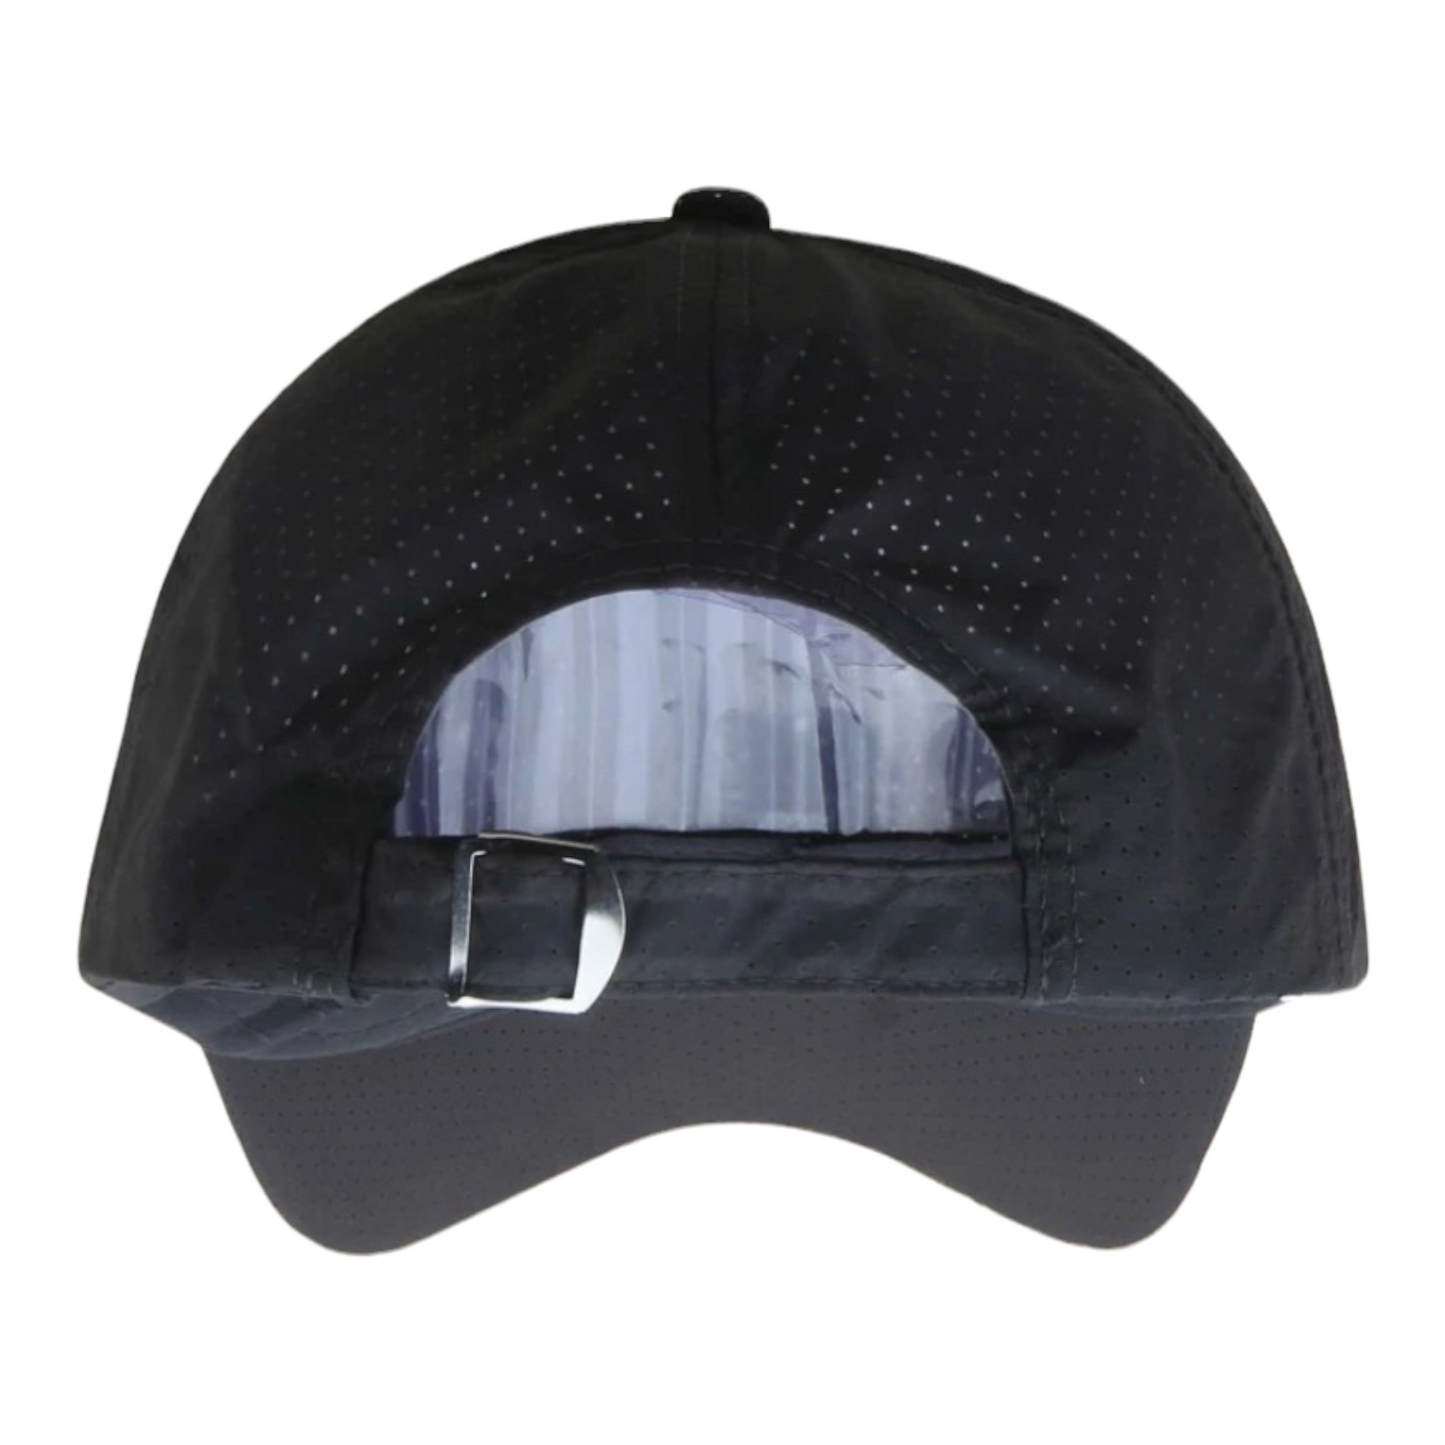 Breathable Black Hat